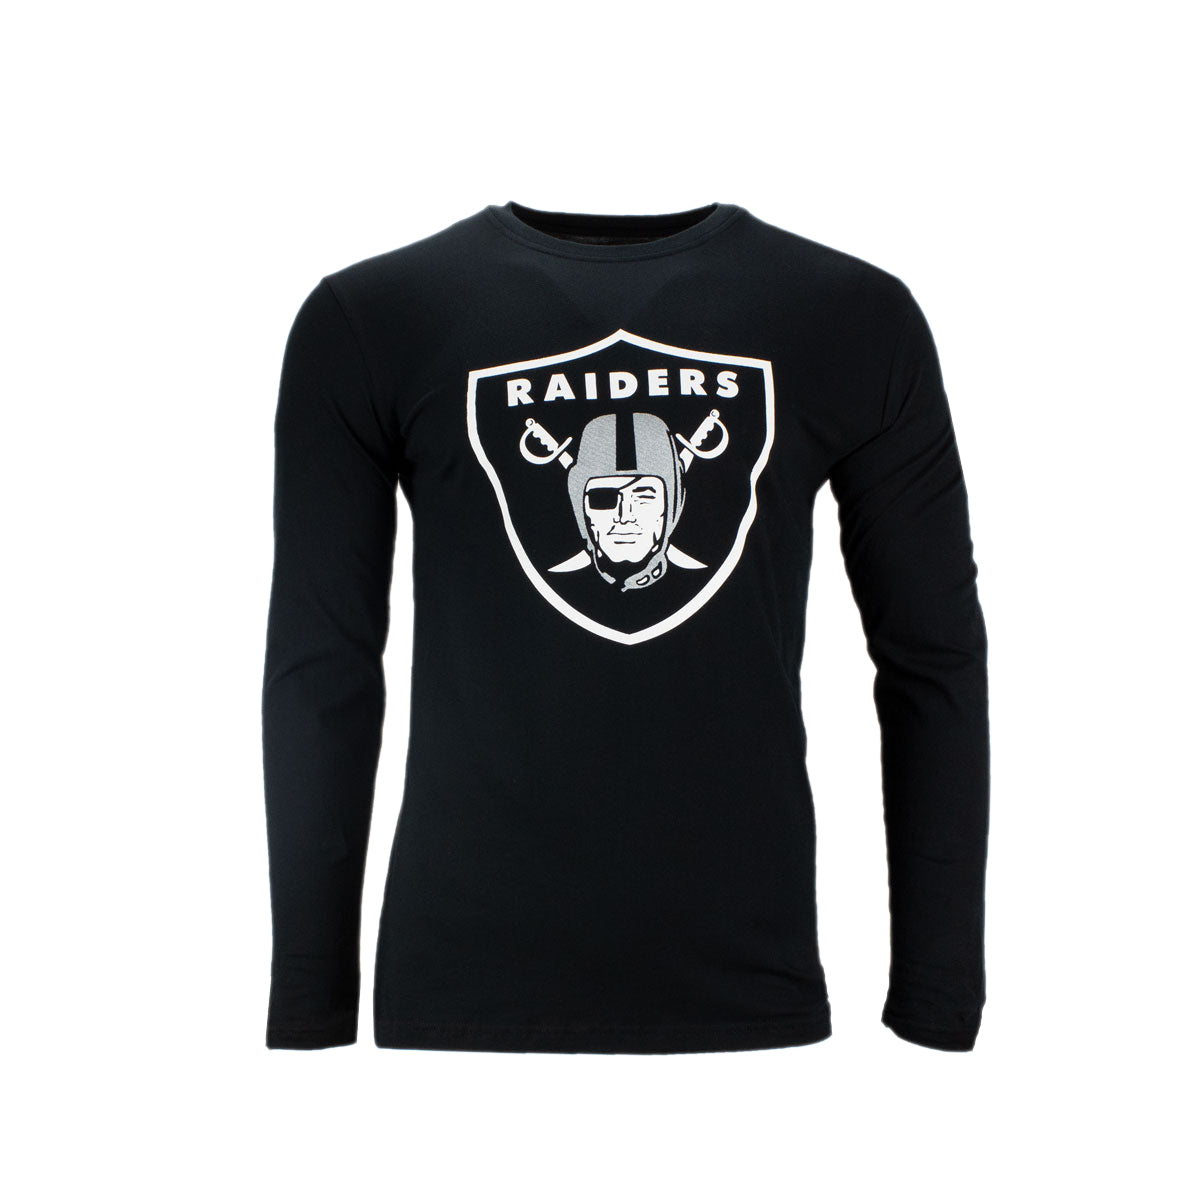 Fanatics NFL Las Vegas Oakland Raiders langarm Shirt Herren 1568MBLK1ADORA 2XL